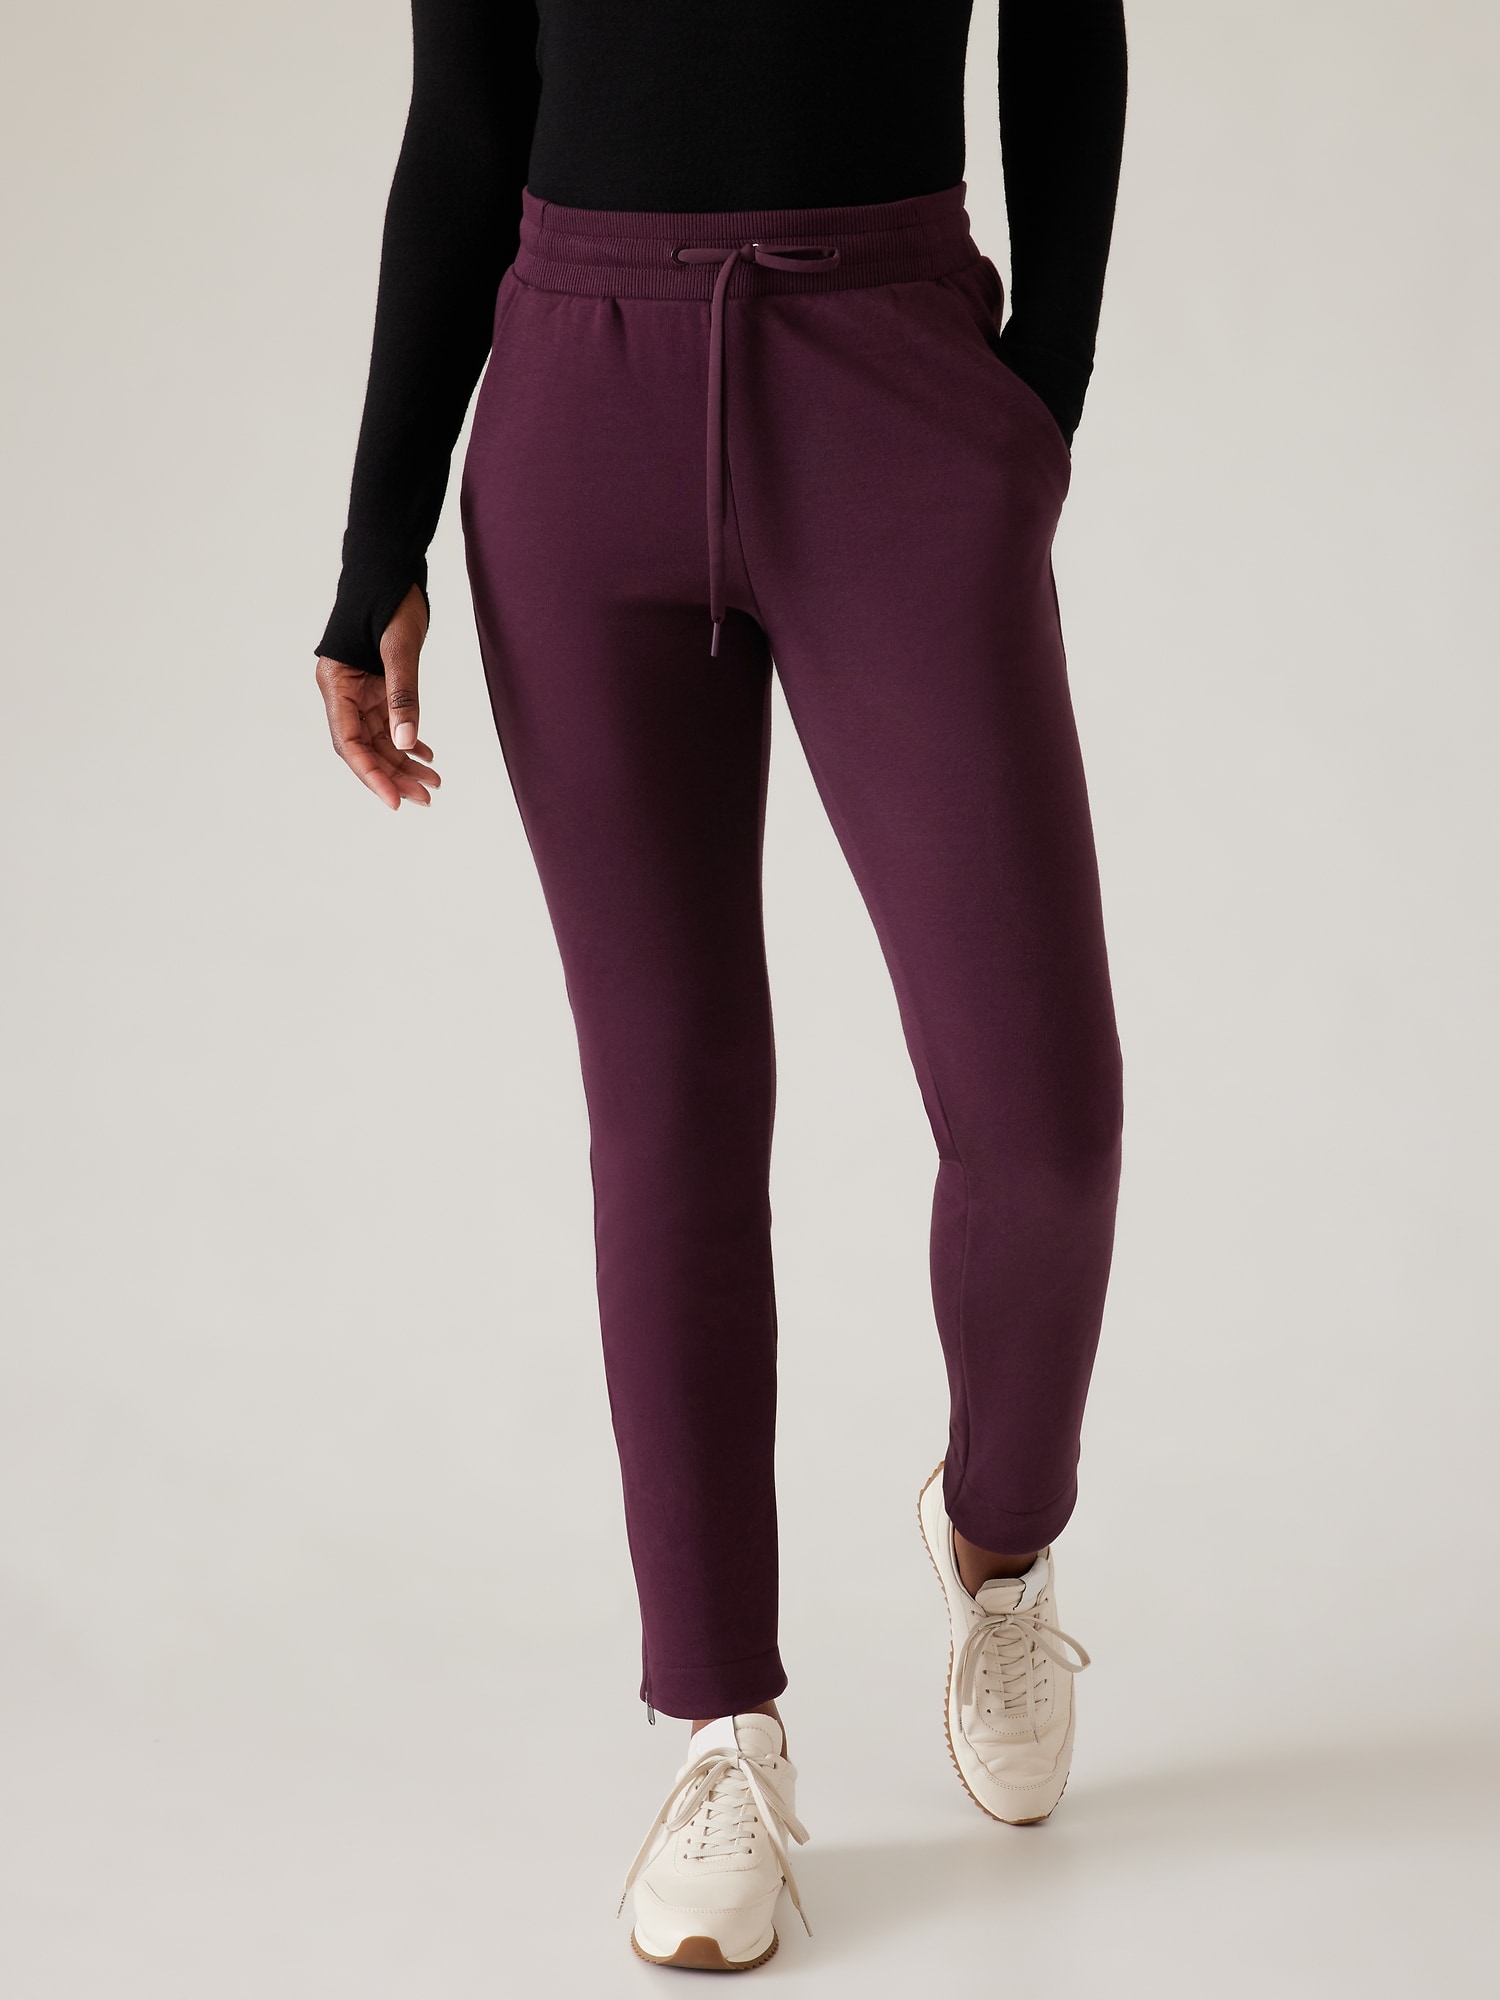 Lululemon purple legging comparison. Threw in some maroon colors